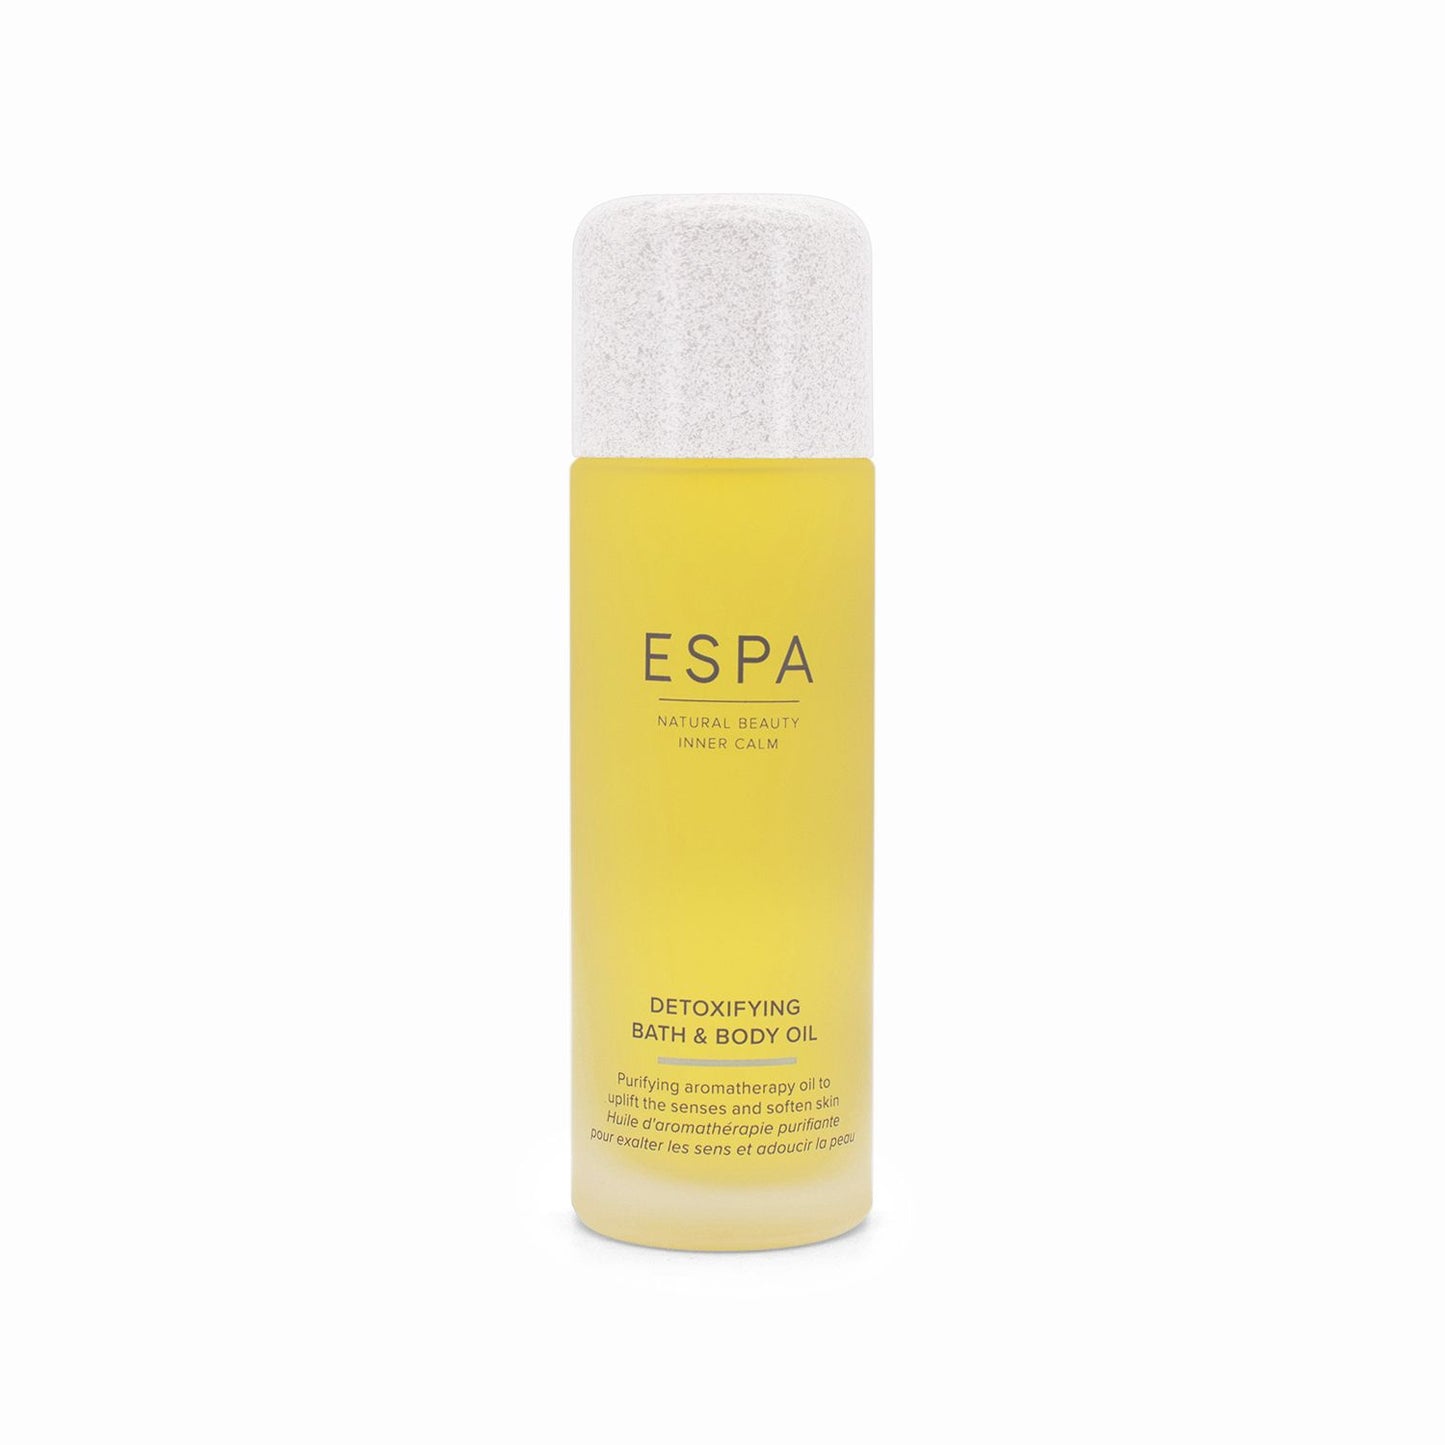 ESPA Detoxifying Bath and Body Oil 100ml - Imperfect Box